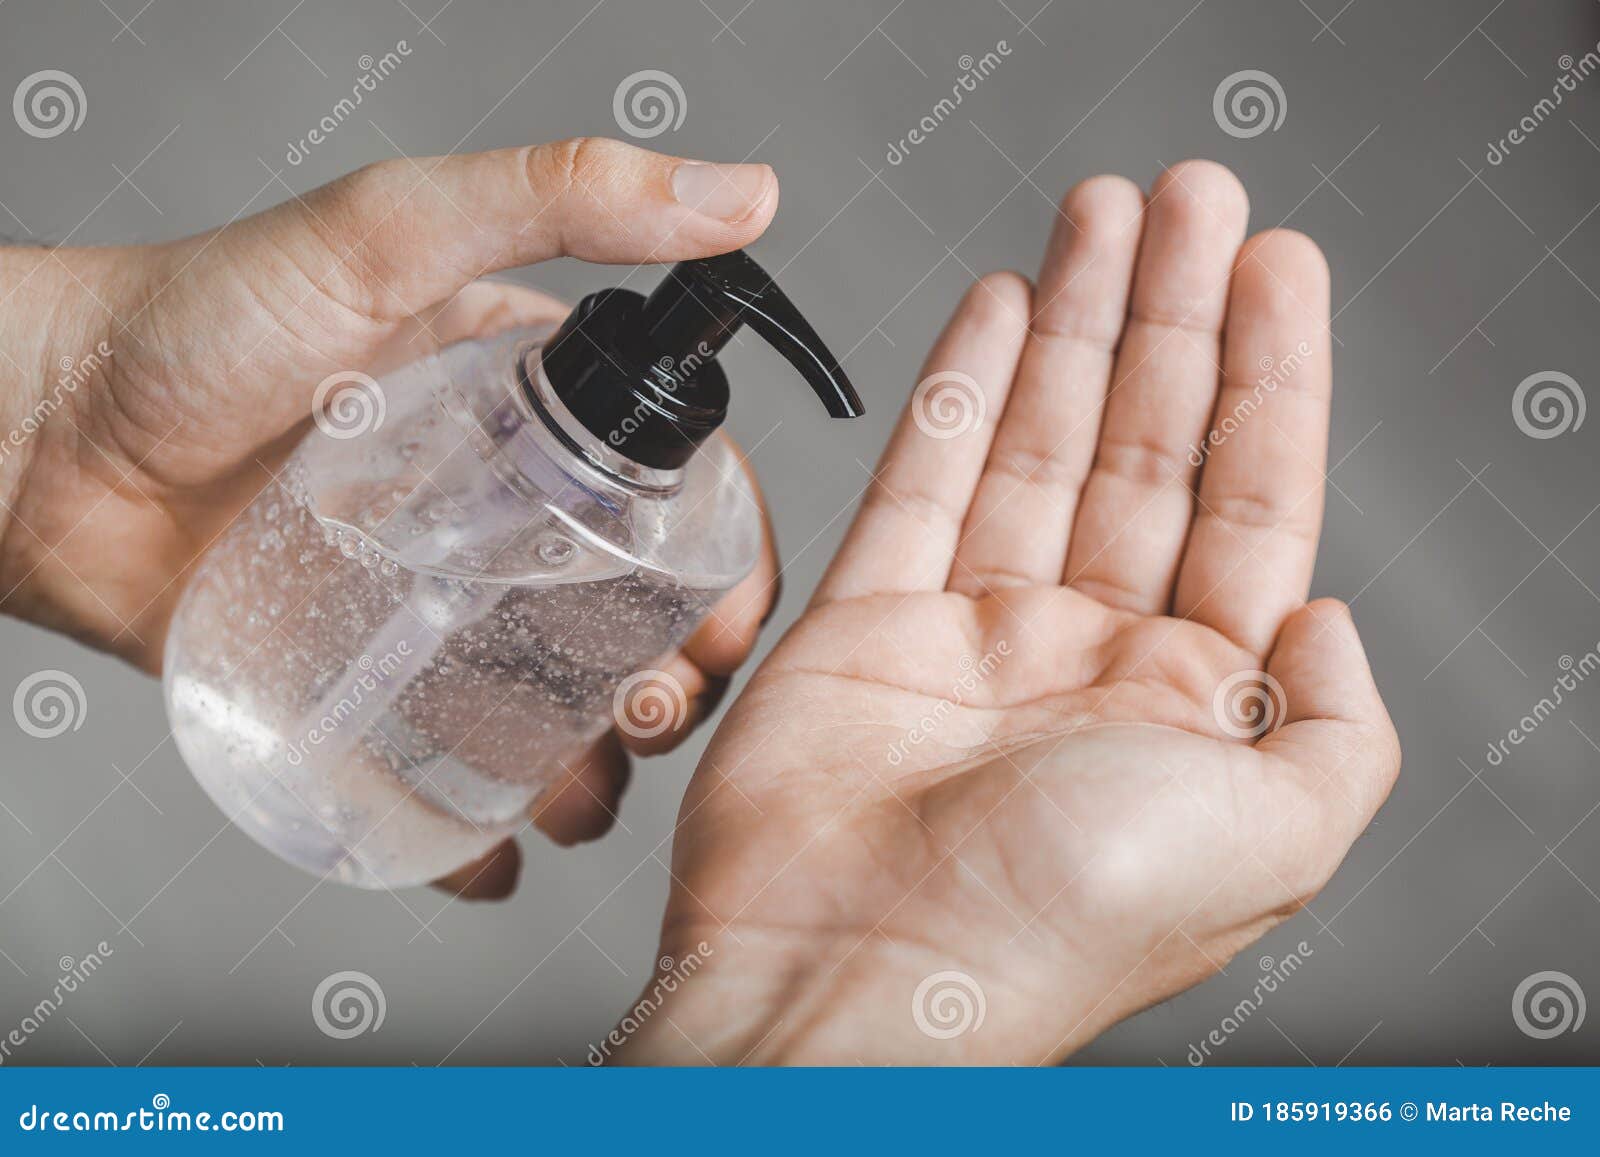 coronavirus prevention hand sanitizer alcohol gel, man washing hands